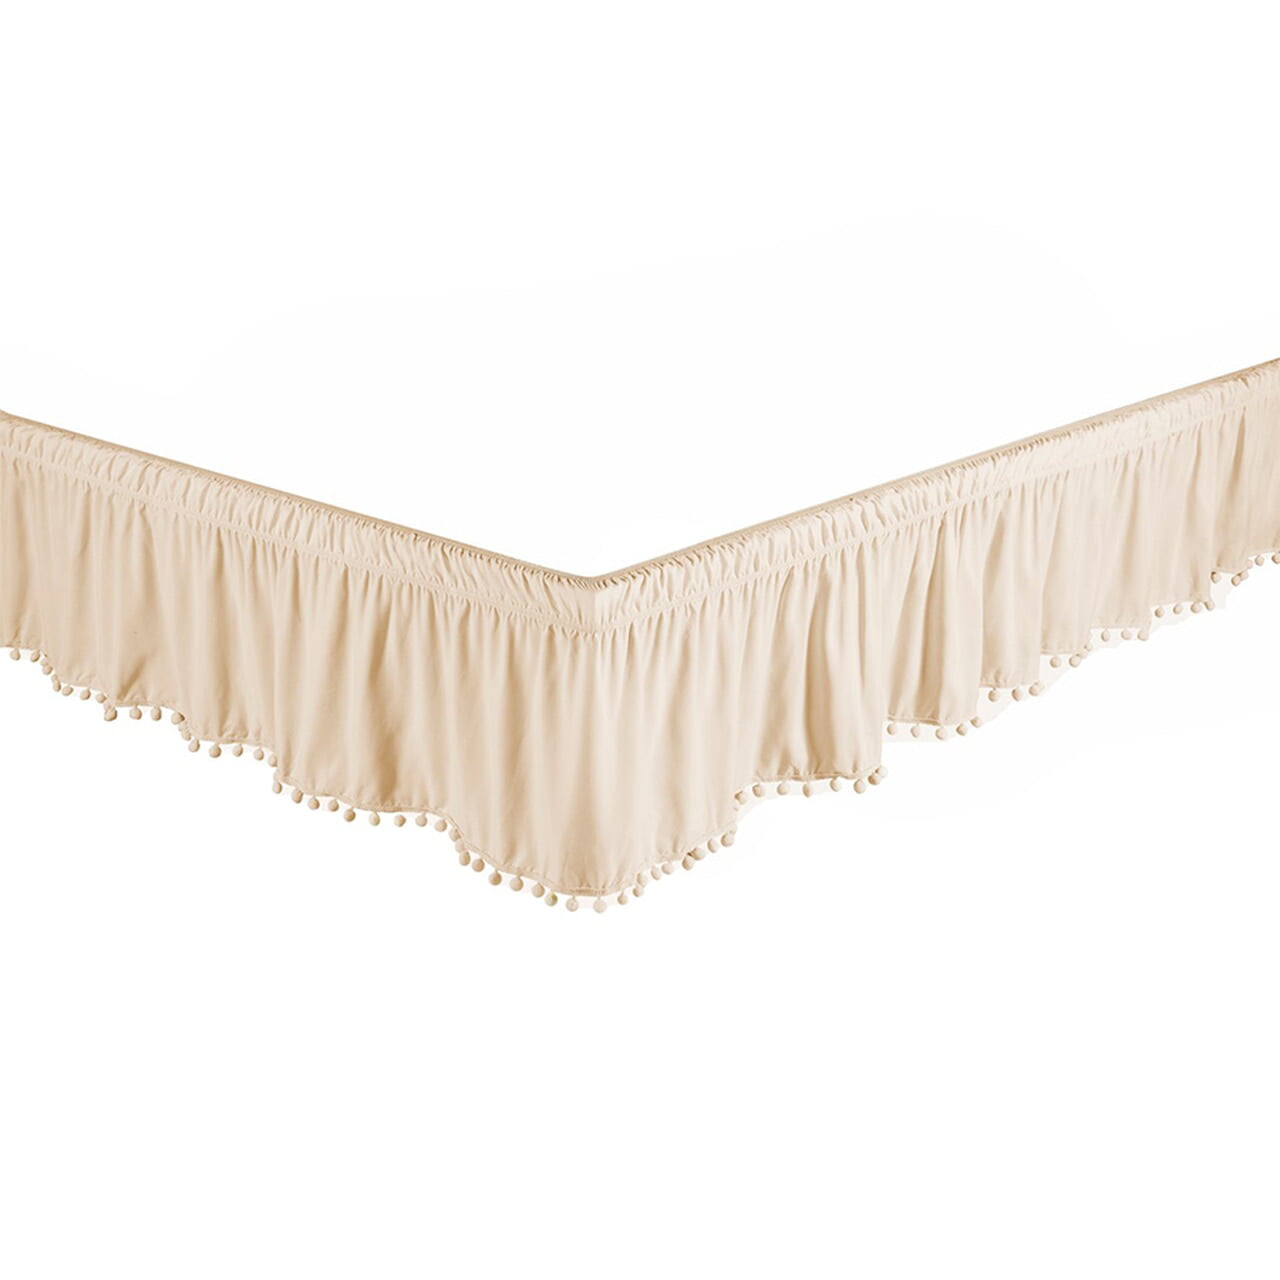 Legacy Decor Bed Skirt Dust Ruffle with Pom-Pom Fringe 100% Brushed Microfiber 